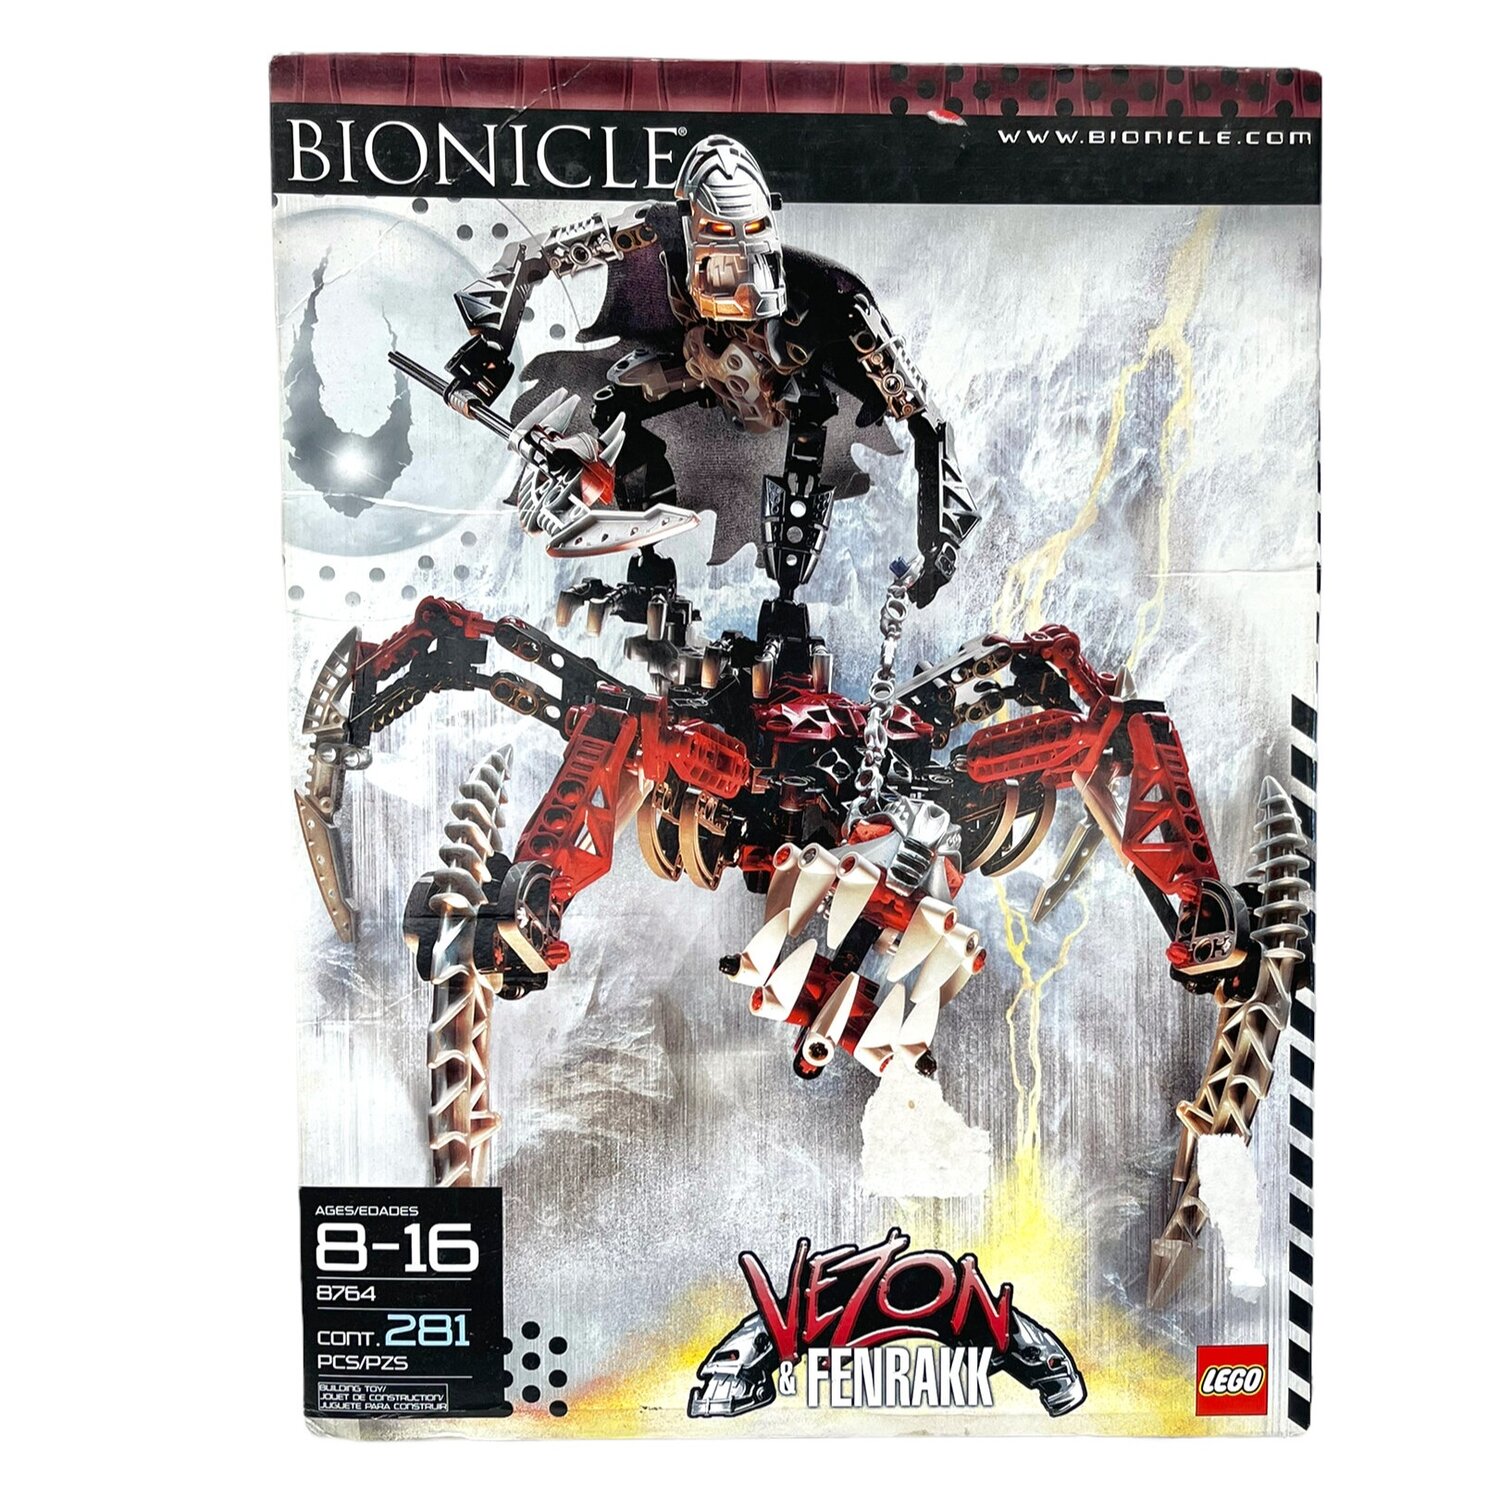 2006 LEGO Bionicle 8764, "Vezon and Fenrakk" — Mercer Island Thrift Shop